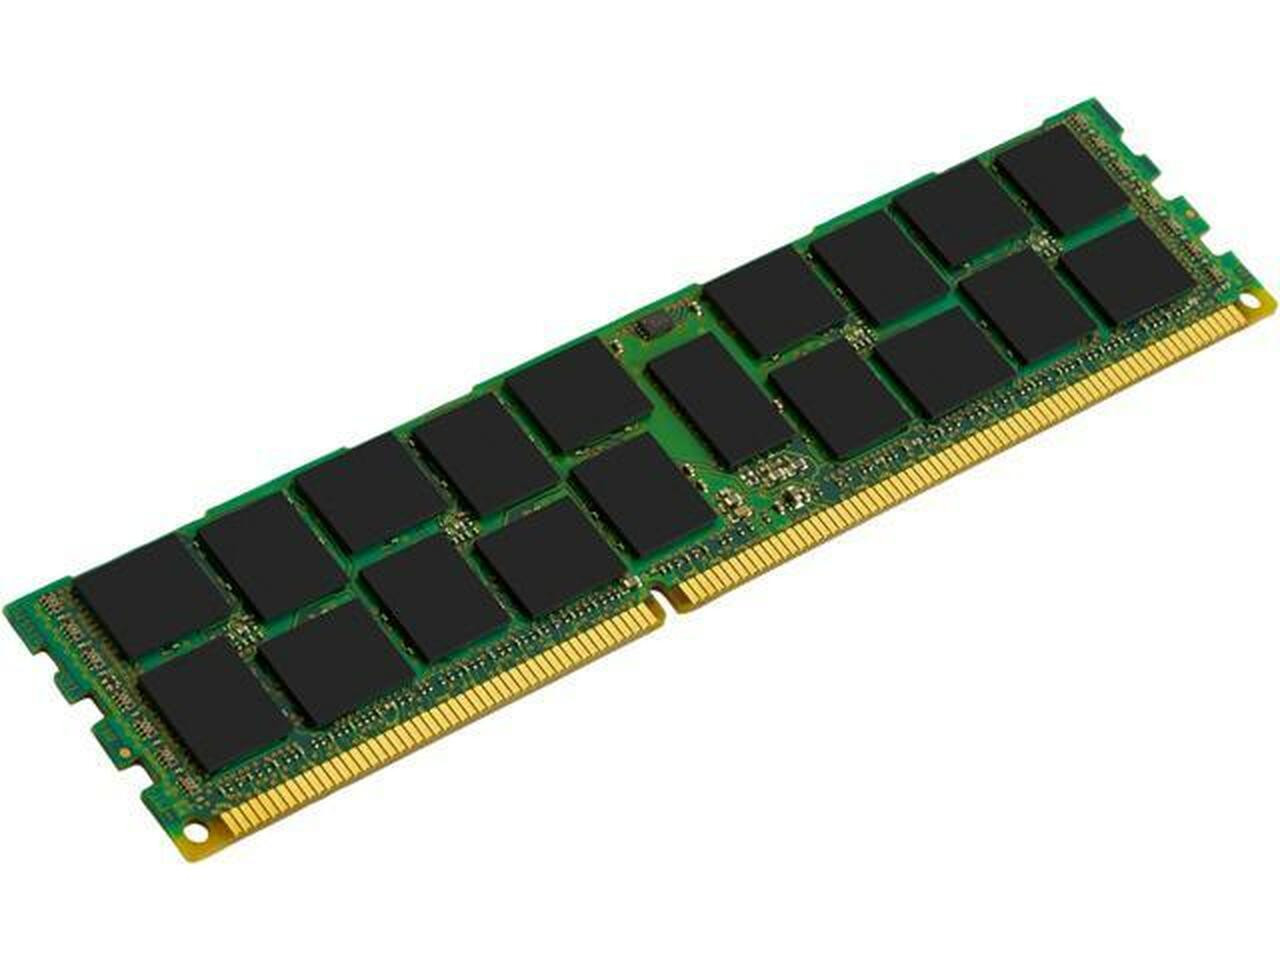 Netpatibles 2GB DDR3 SDRAM Memory Module - MEMDR320LHL04EU13NPM